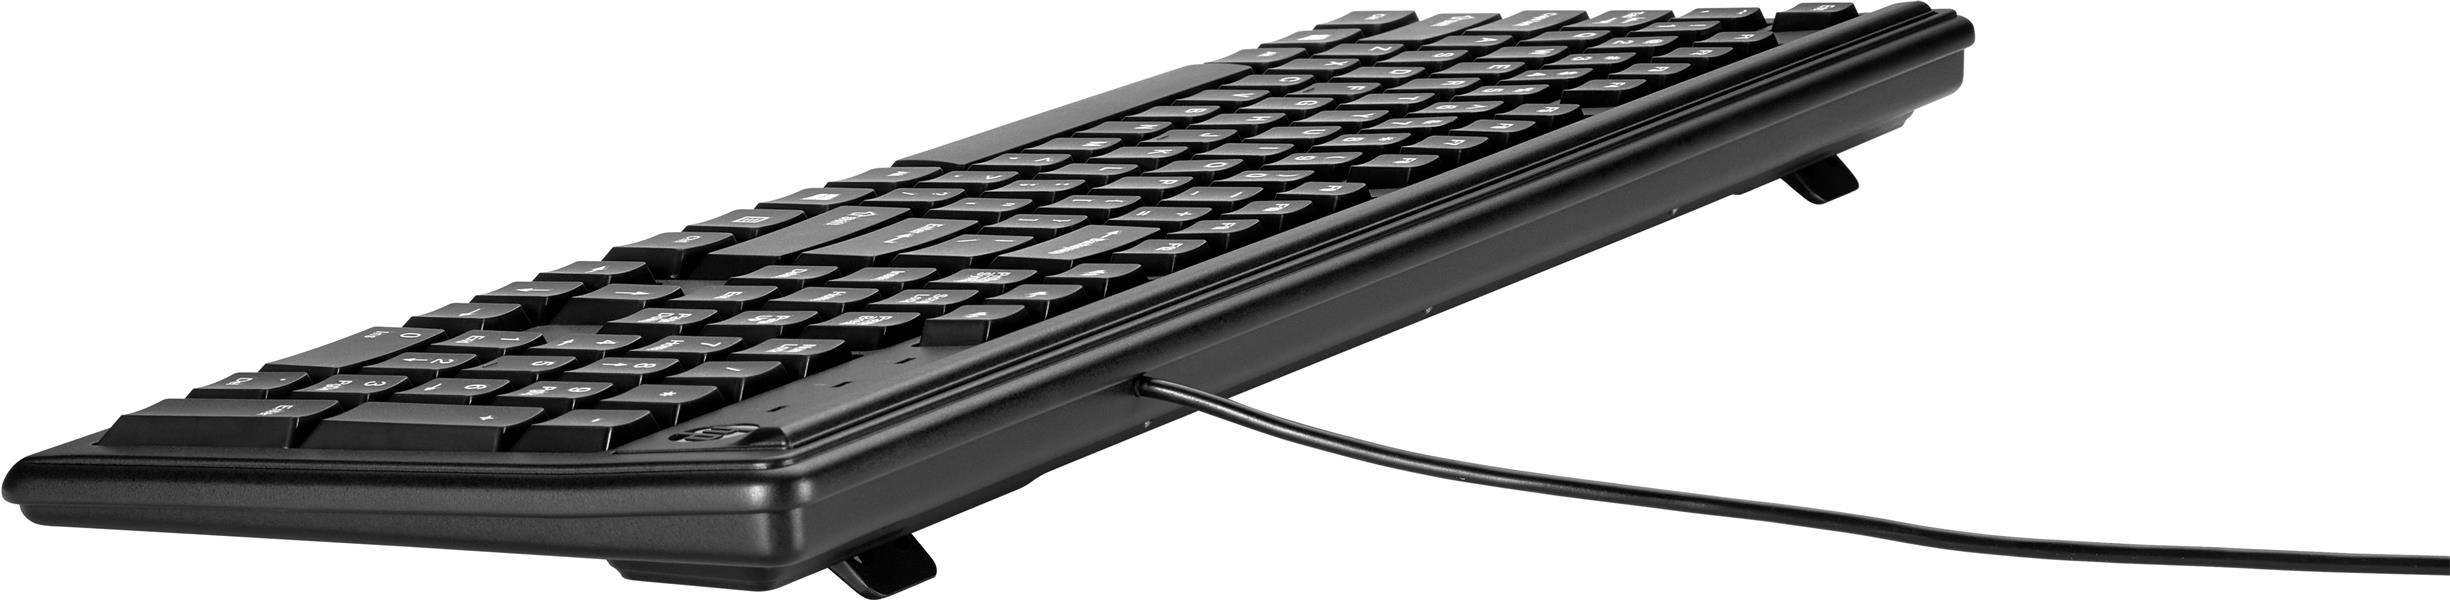 HP 100 toetsenbord USB Zwart